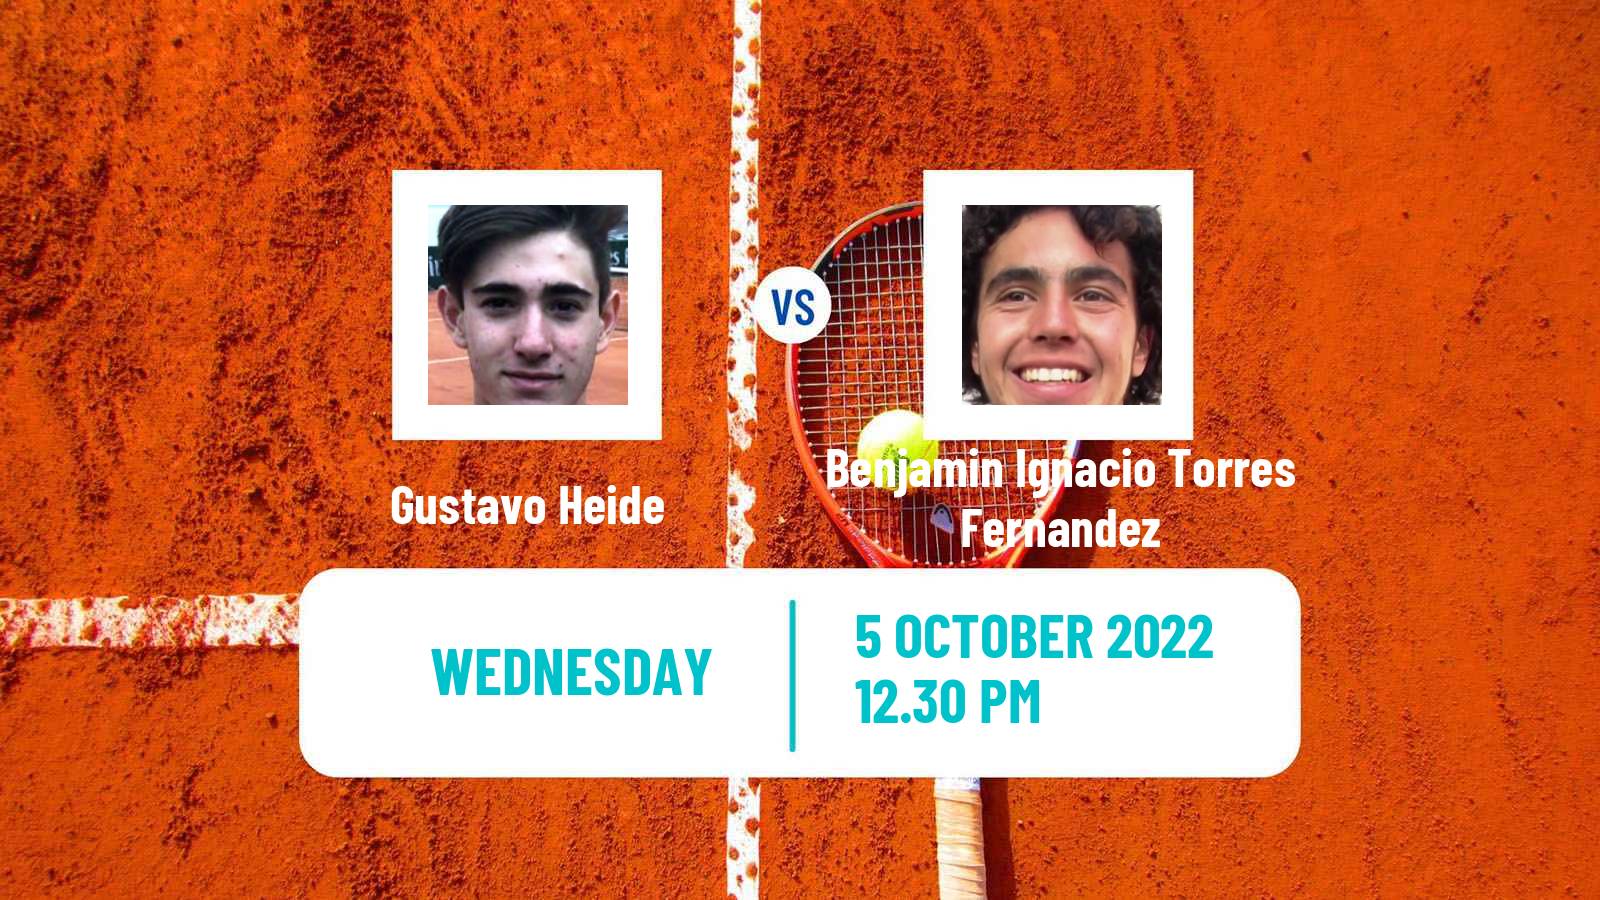 Tennis ITF Tournaments Gustavo Heide - Benjamin Ignacio Torres Fernandez